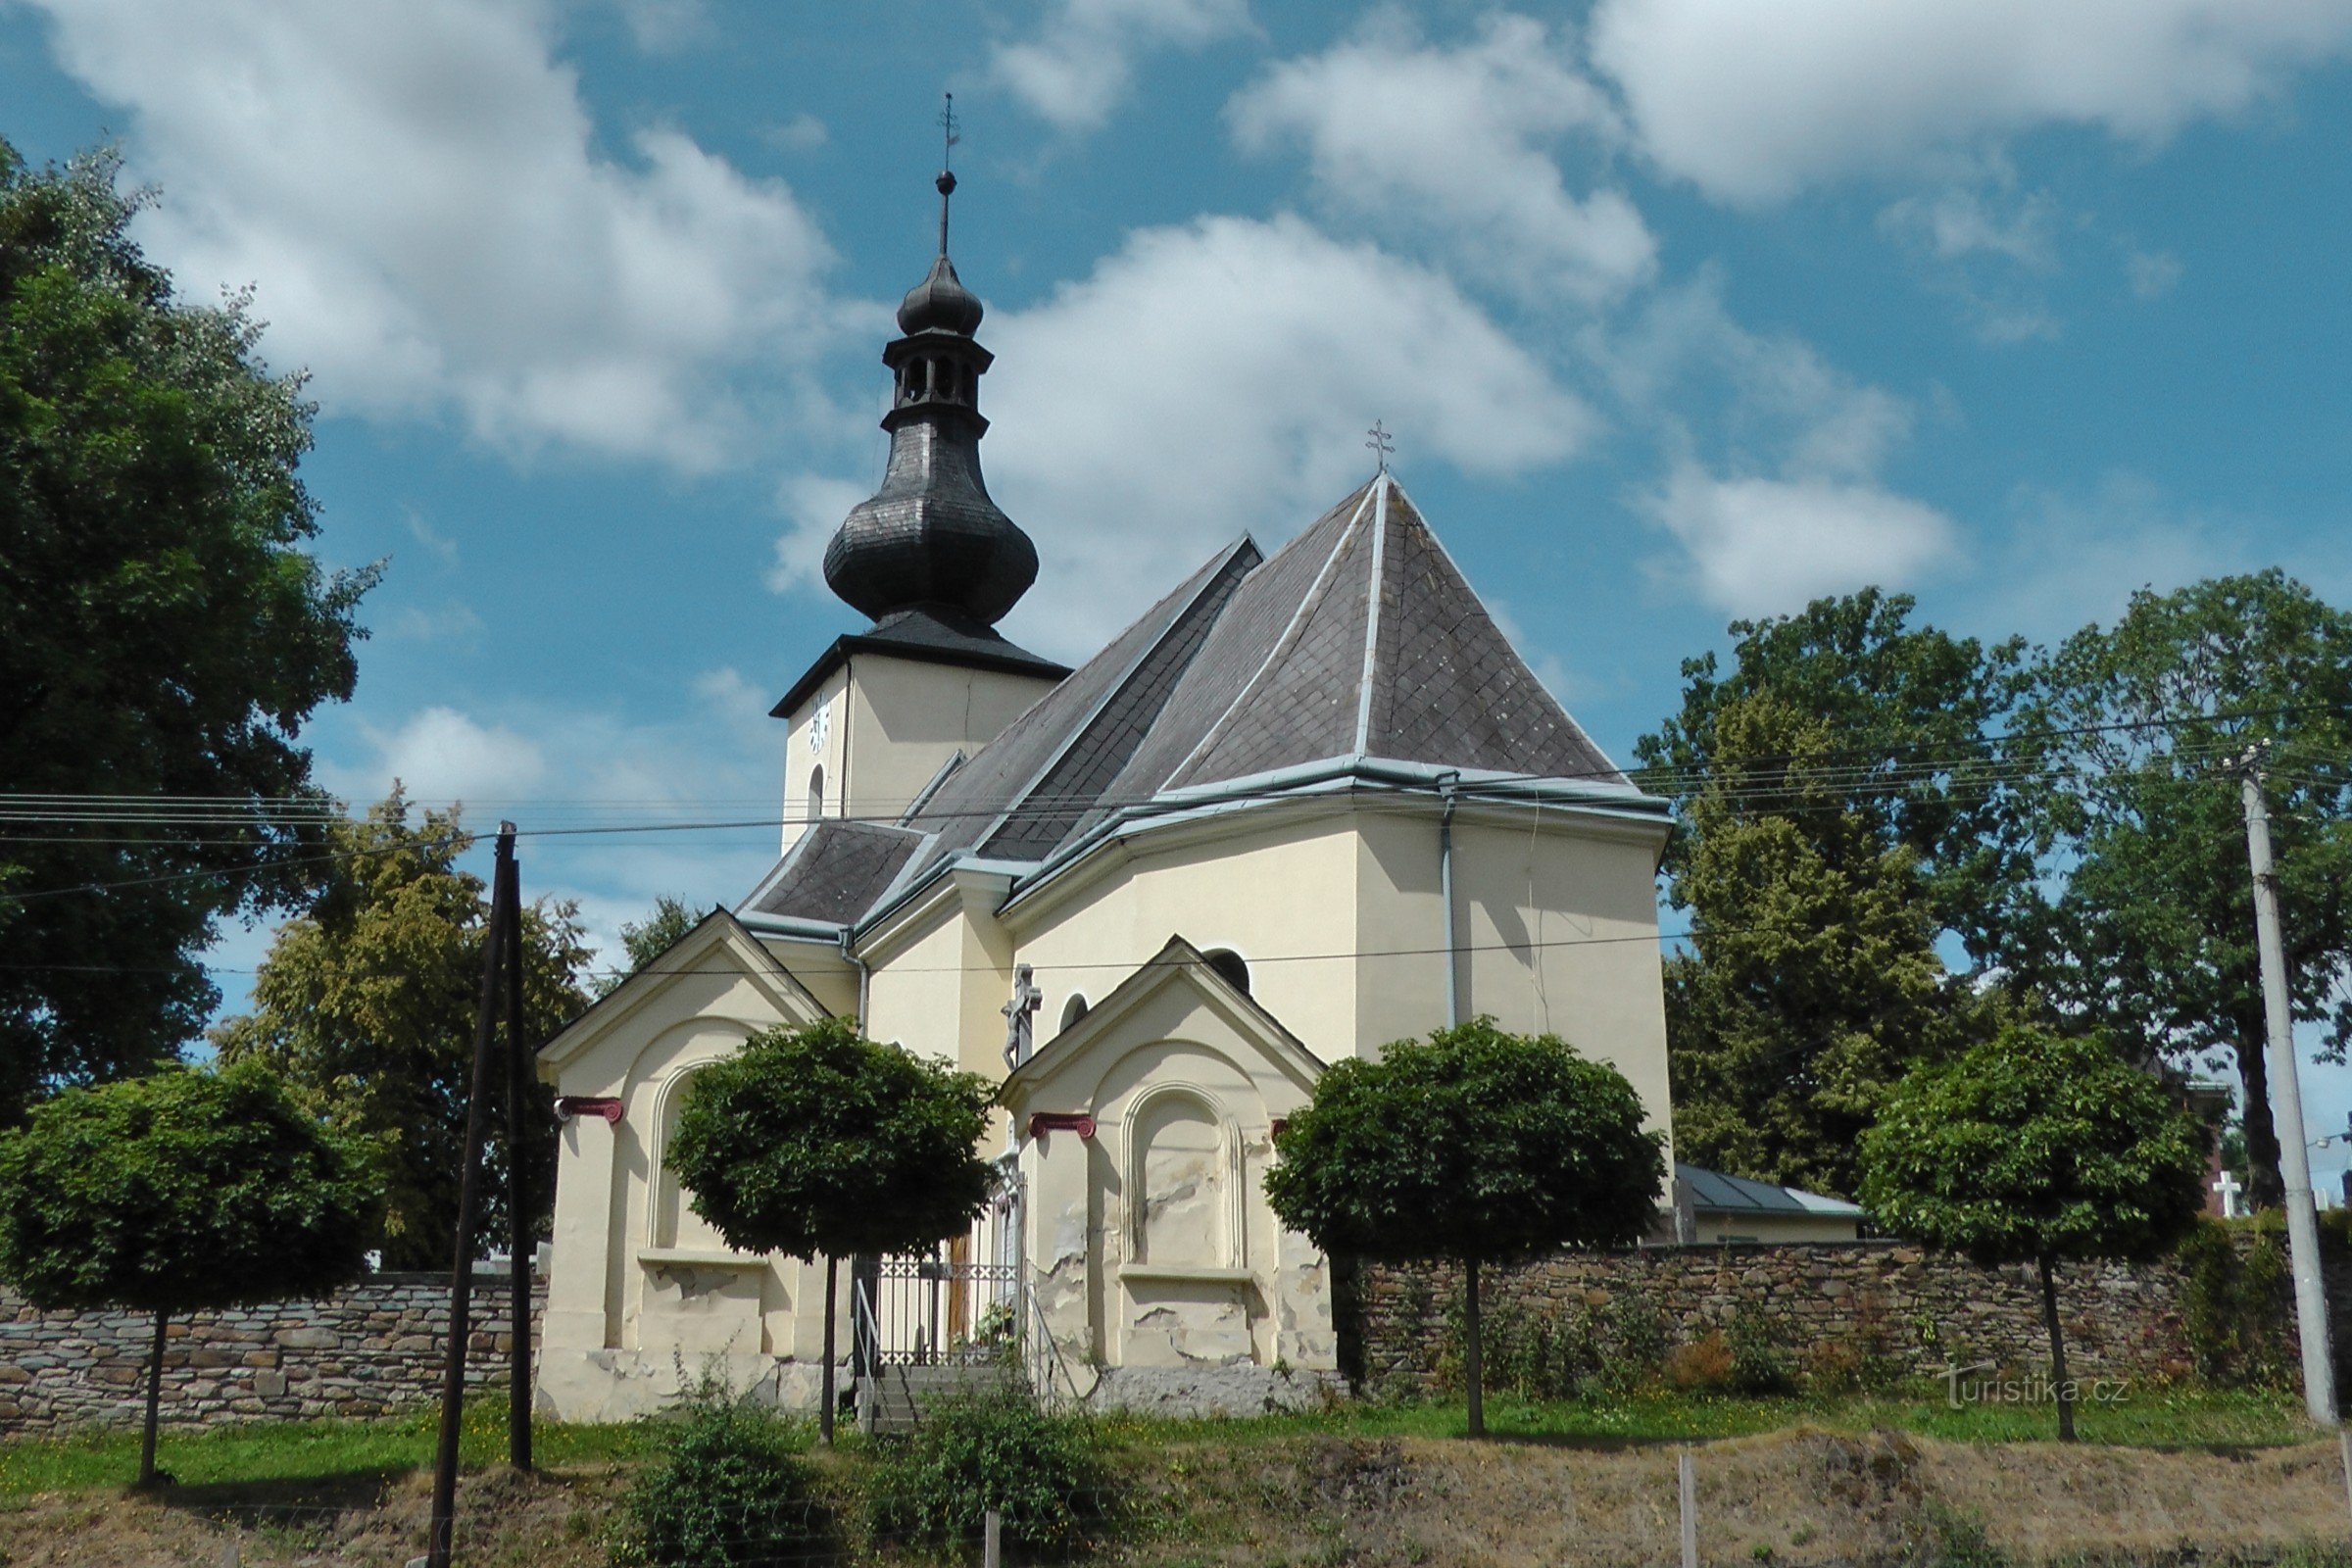 Svatoňovice - Kružberk